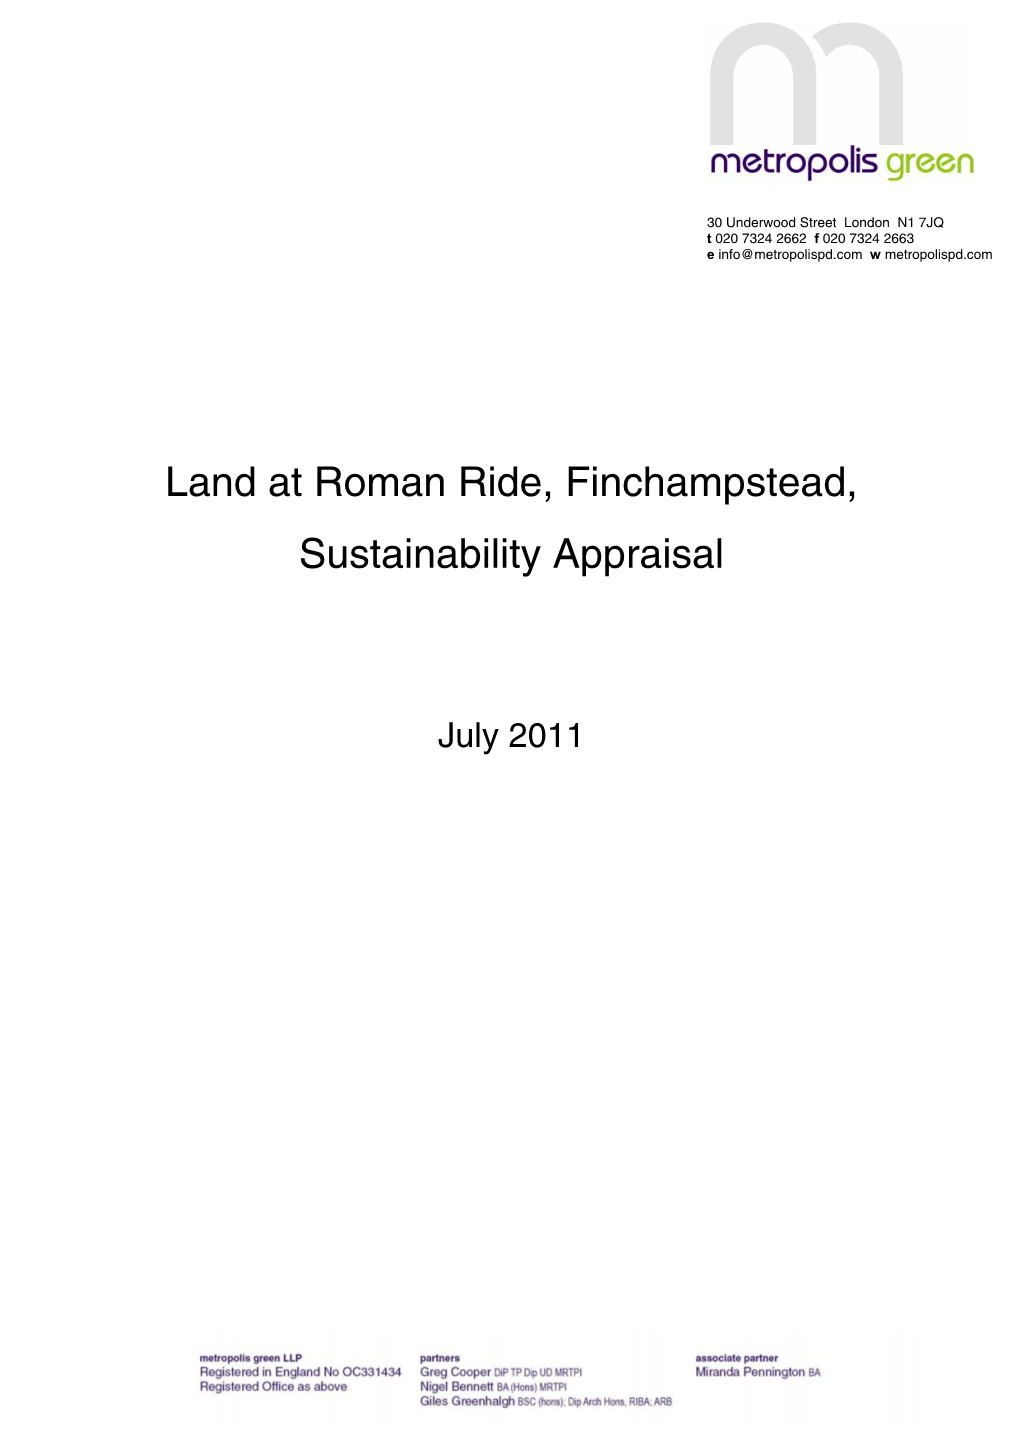 Land at Roman Ride, Finchampstead, Sustainability Appraisal